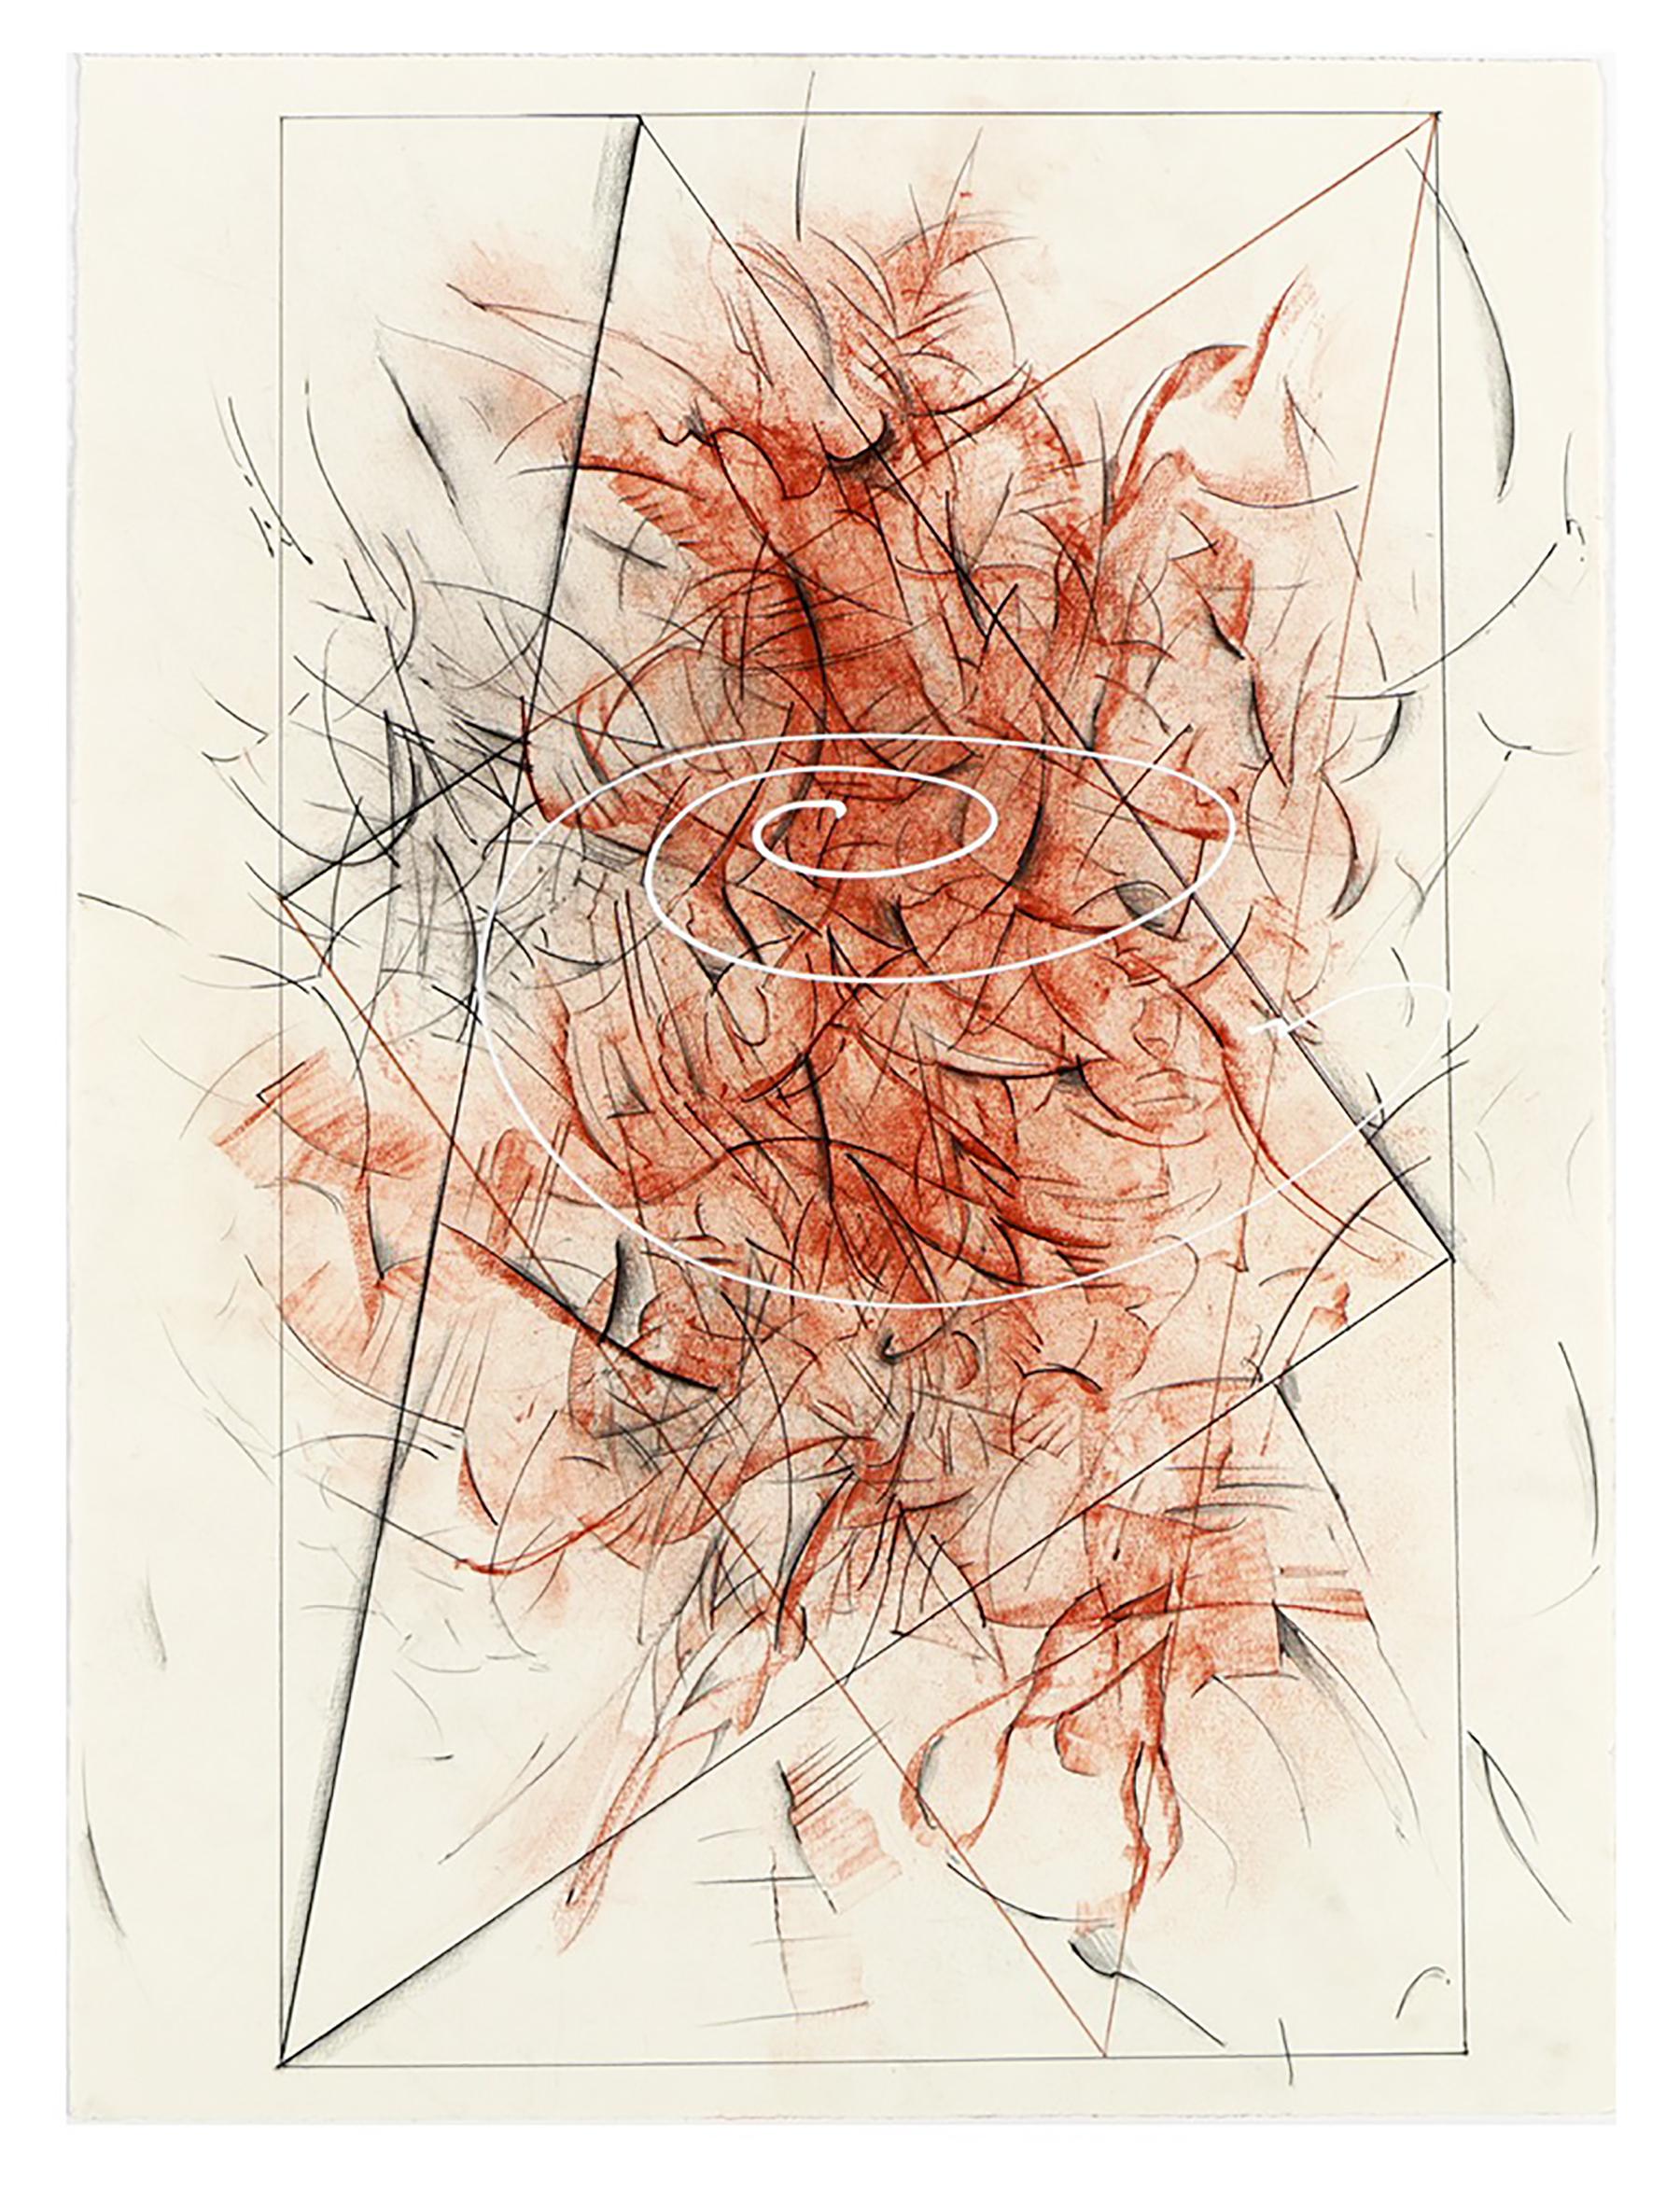 Ricardo Morin "Triangulation III", original mixed media drawing on paper